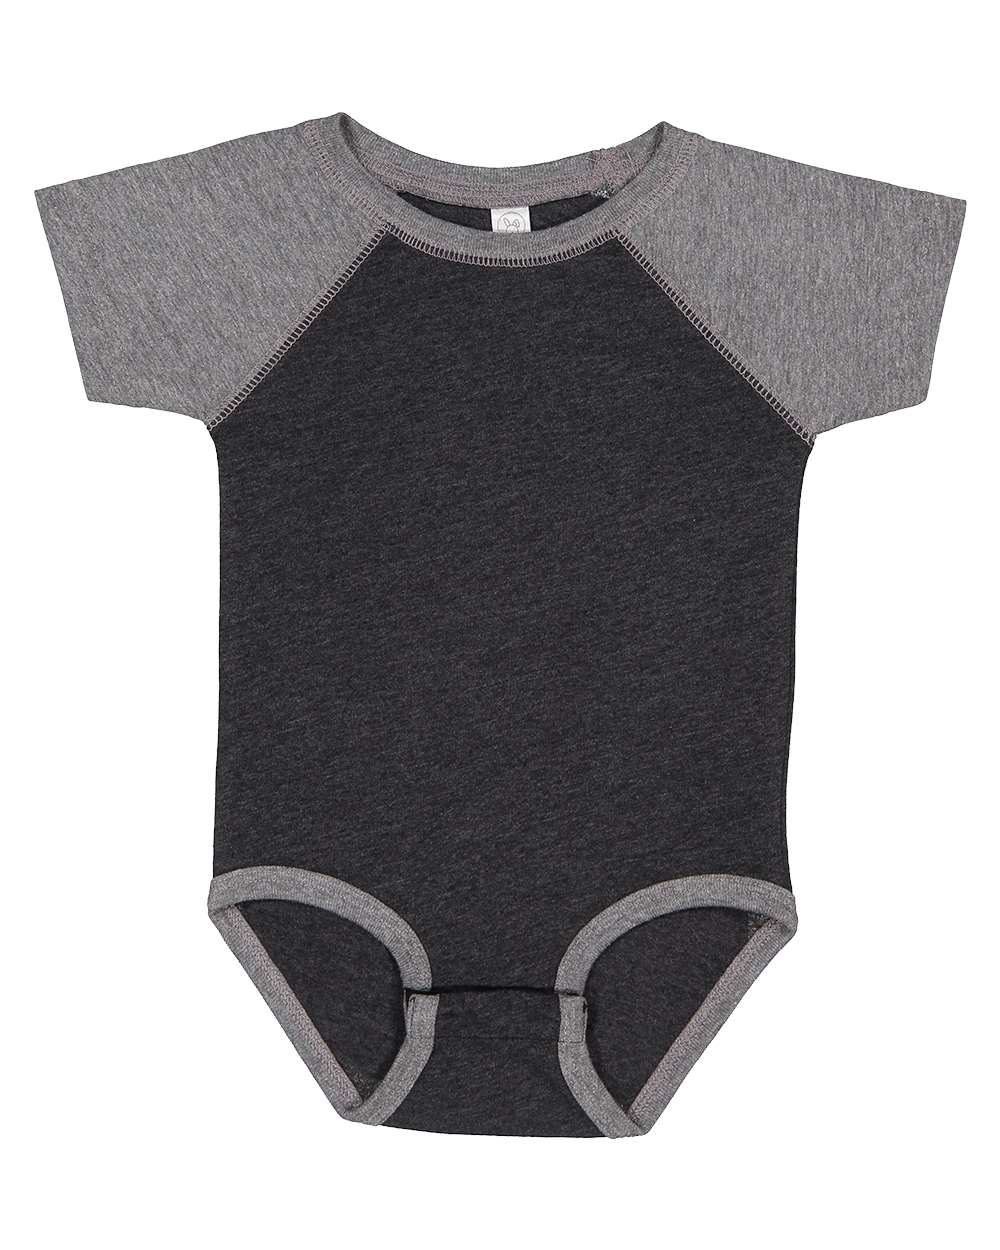 rabbit skins infant baseball jersey bodysuit onesie vintage smoke granite heather grey